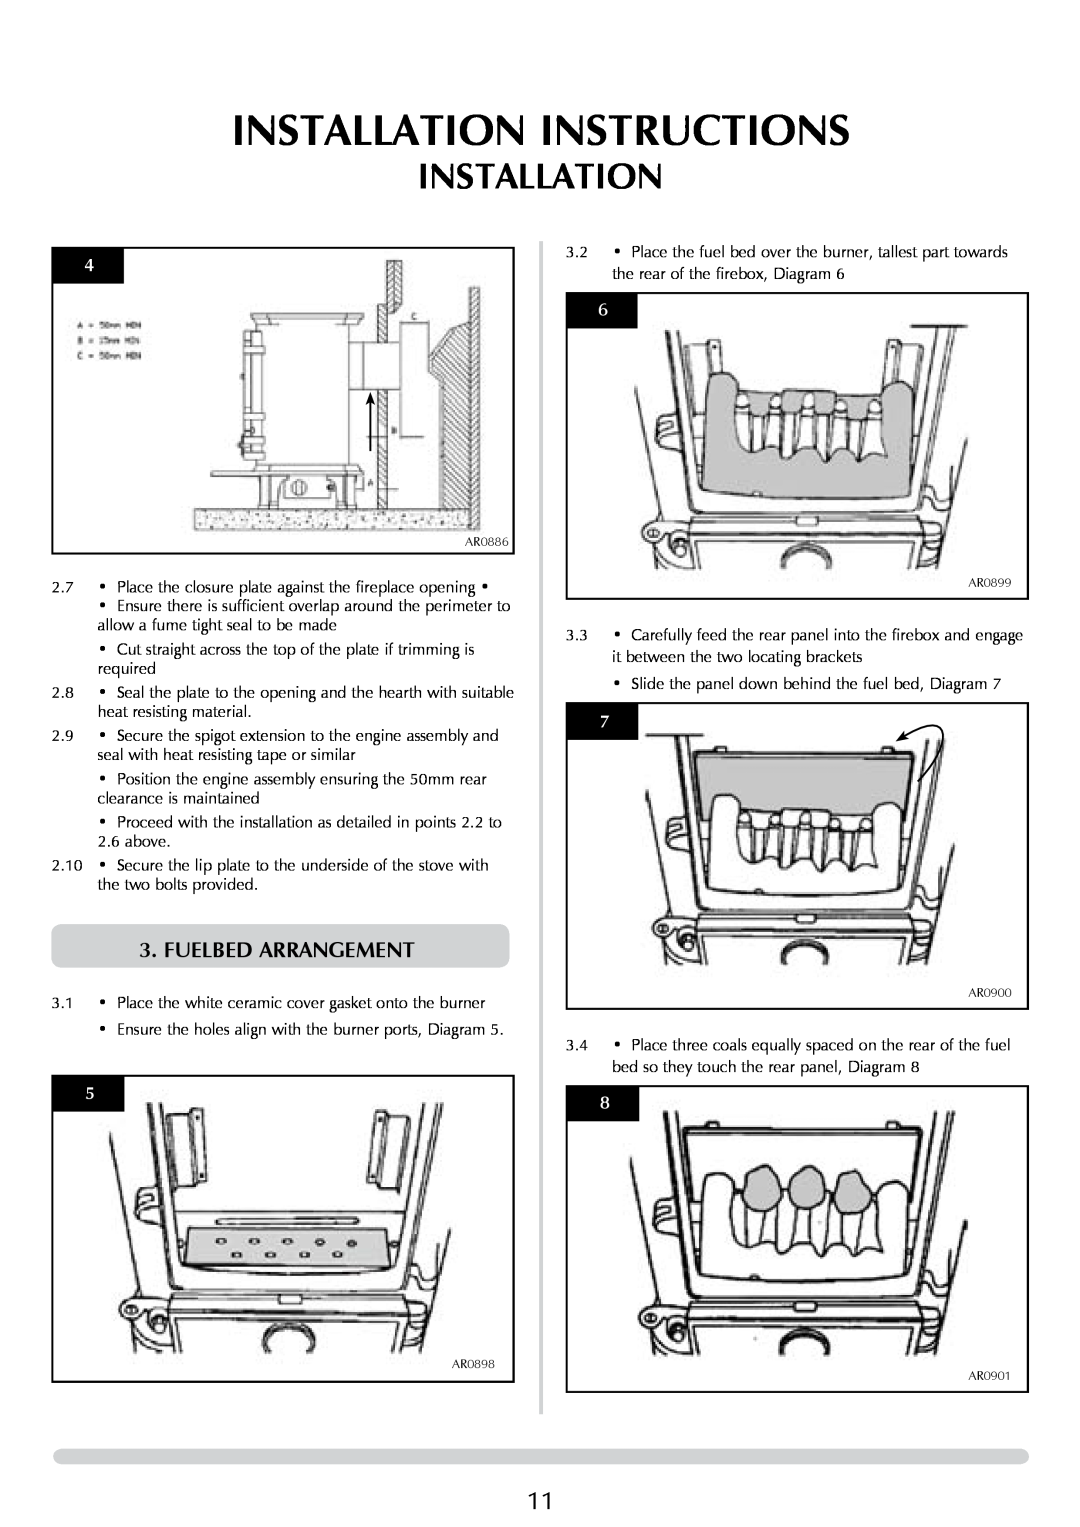 Stovax P8050 manual Installation Instructions, Fuelbed Arrangement 